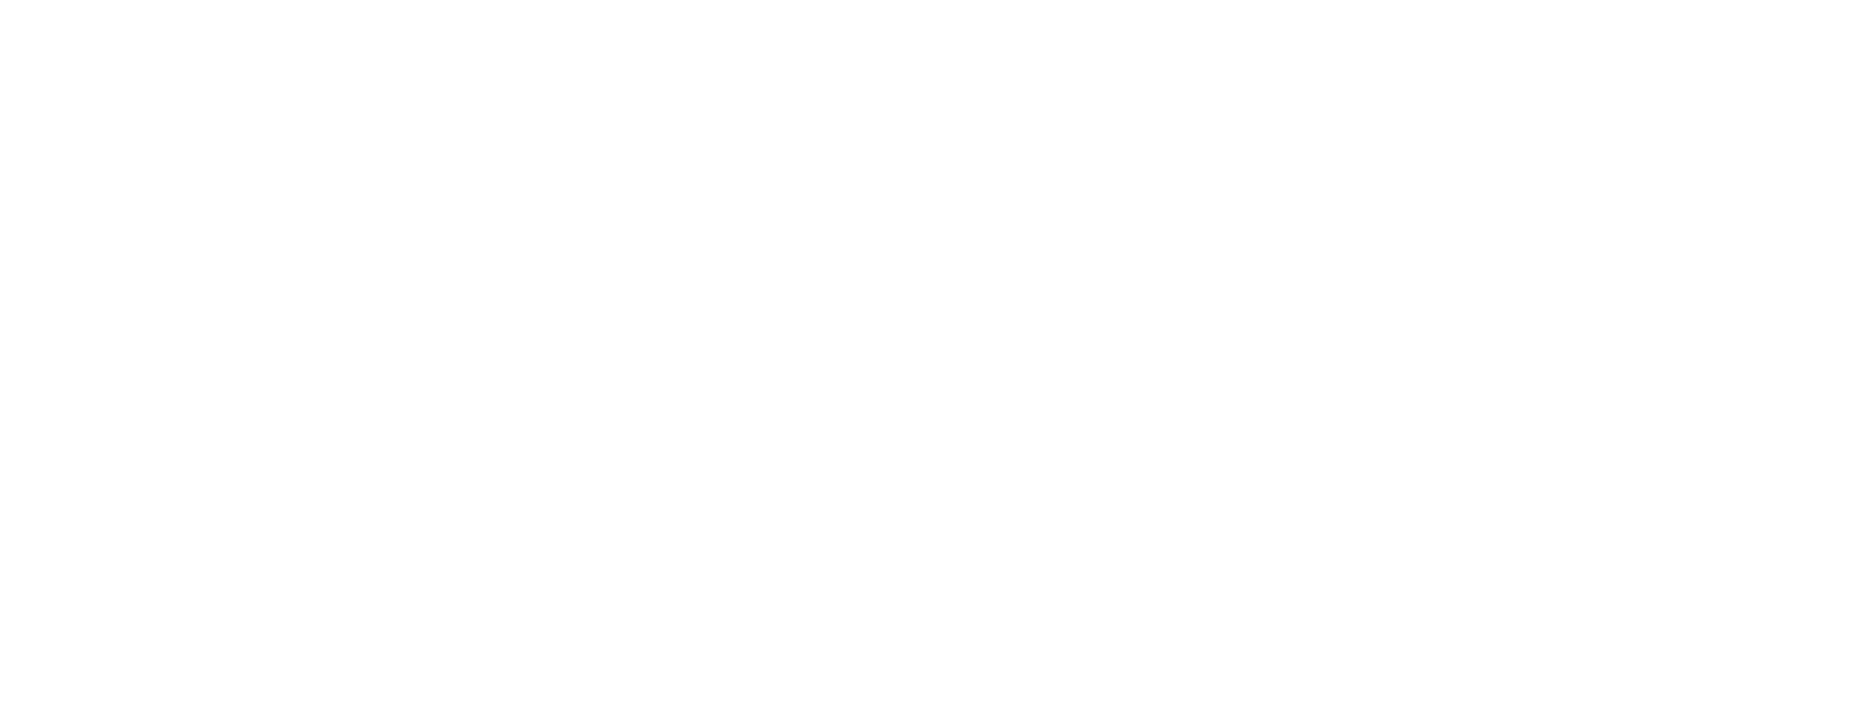 renew biomedical logo white - ReNew BioMedical